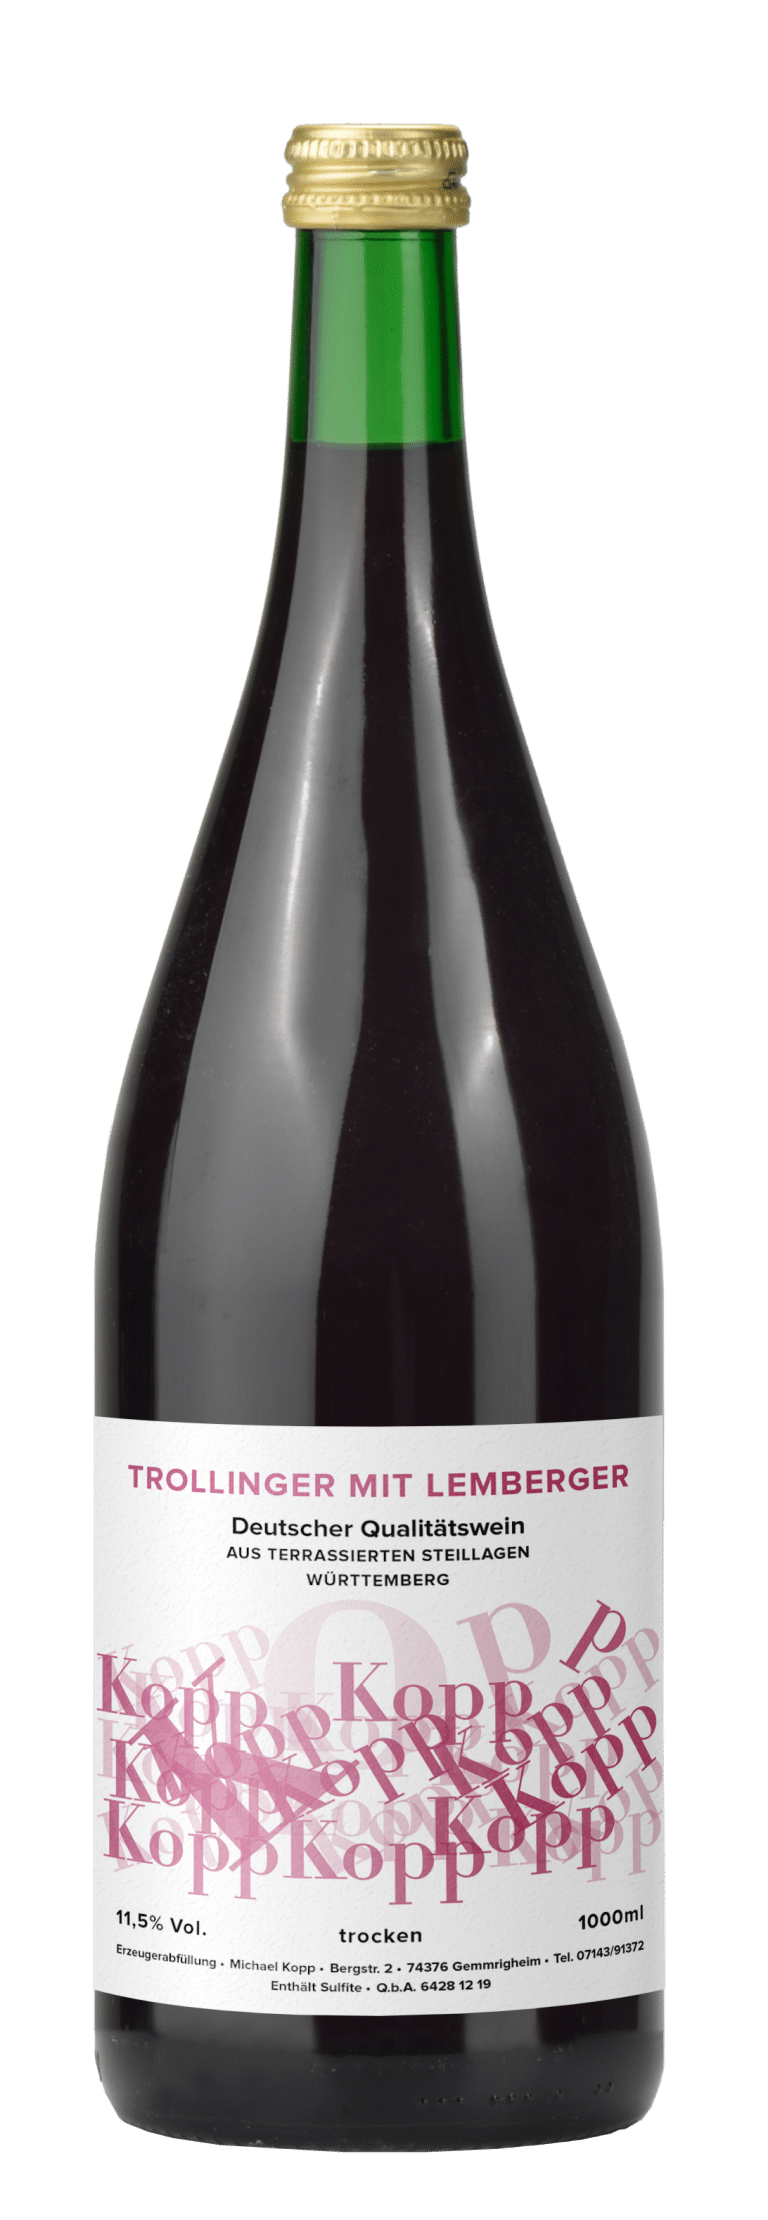 Trollinger mit Lemberger trocken Weinbau Kopp